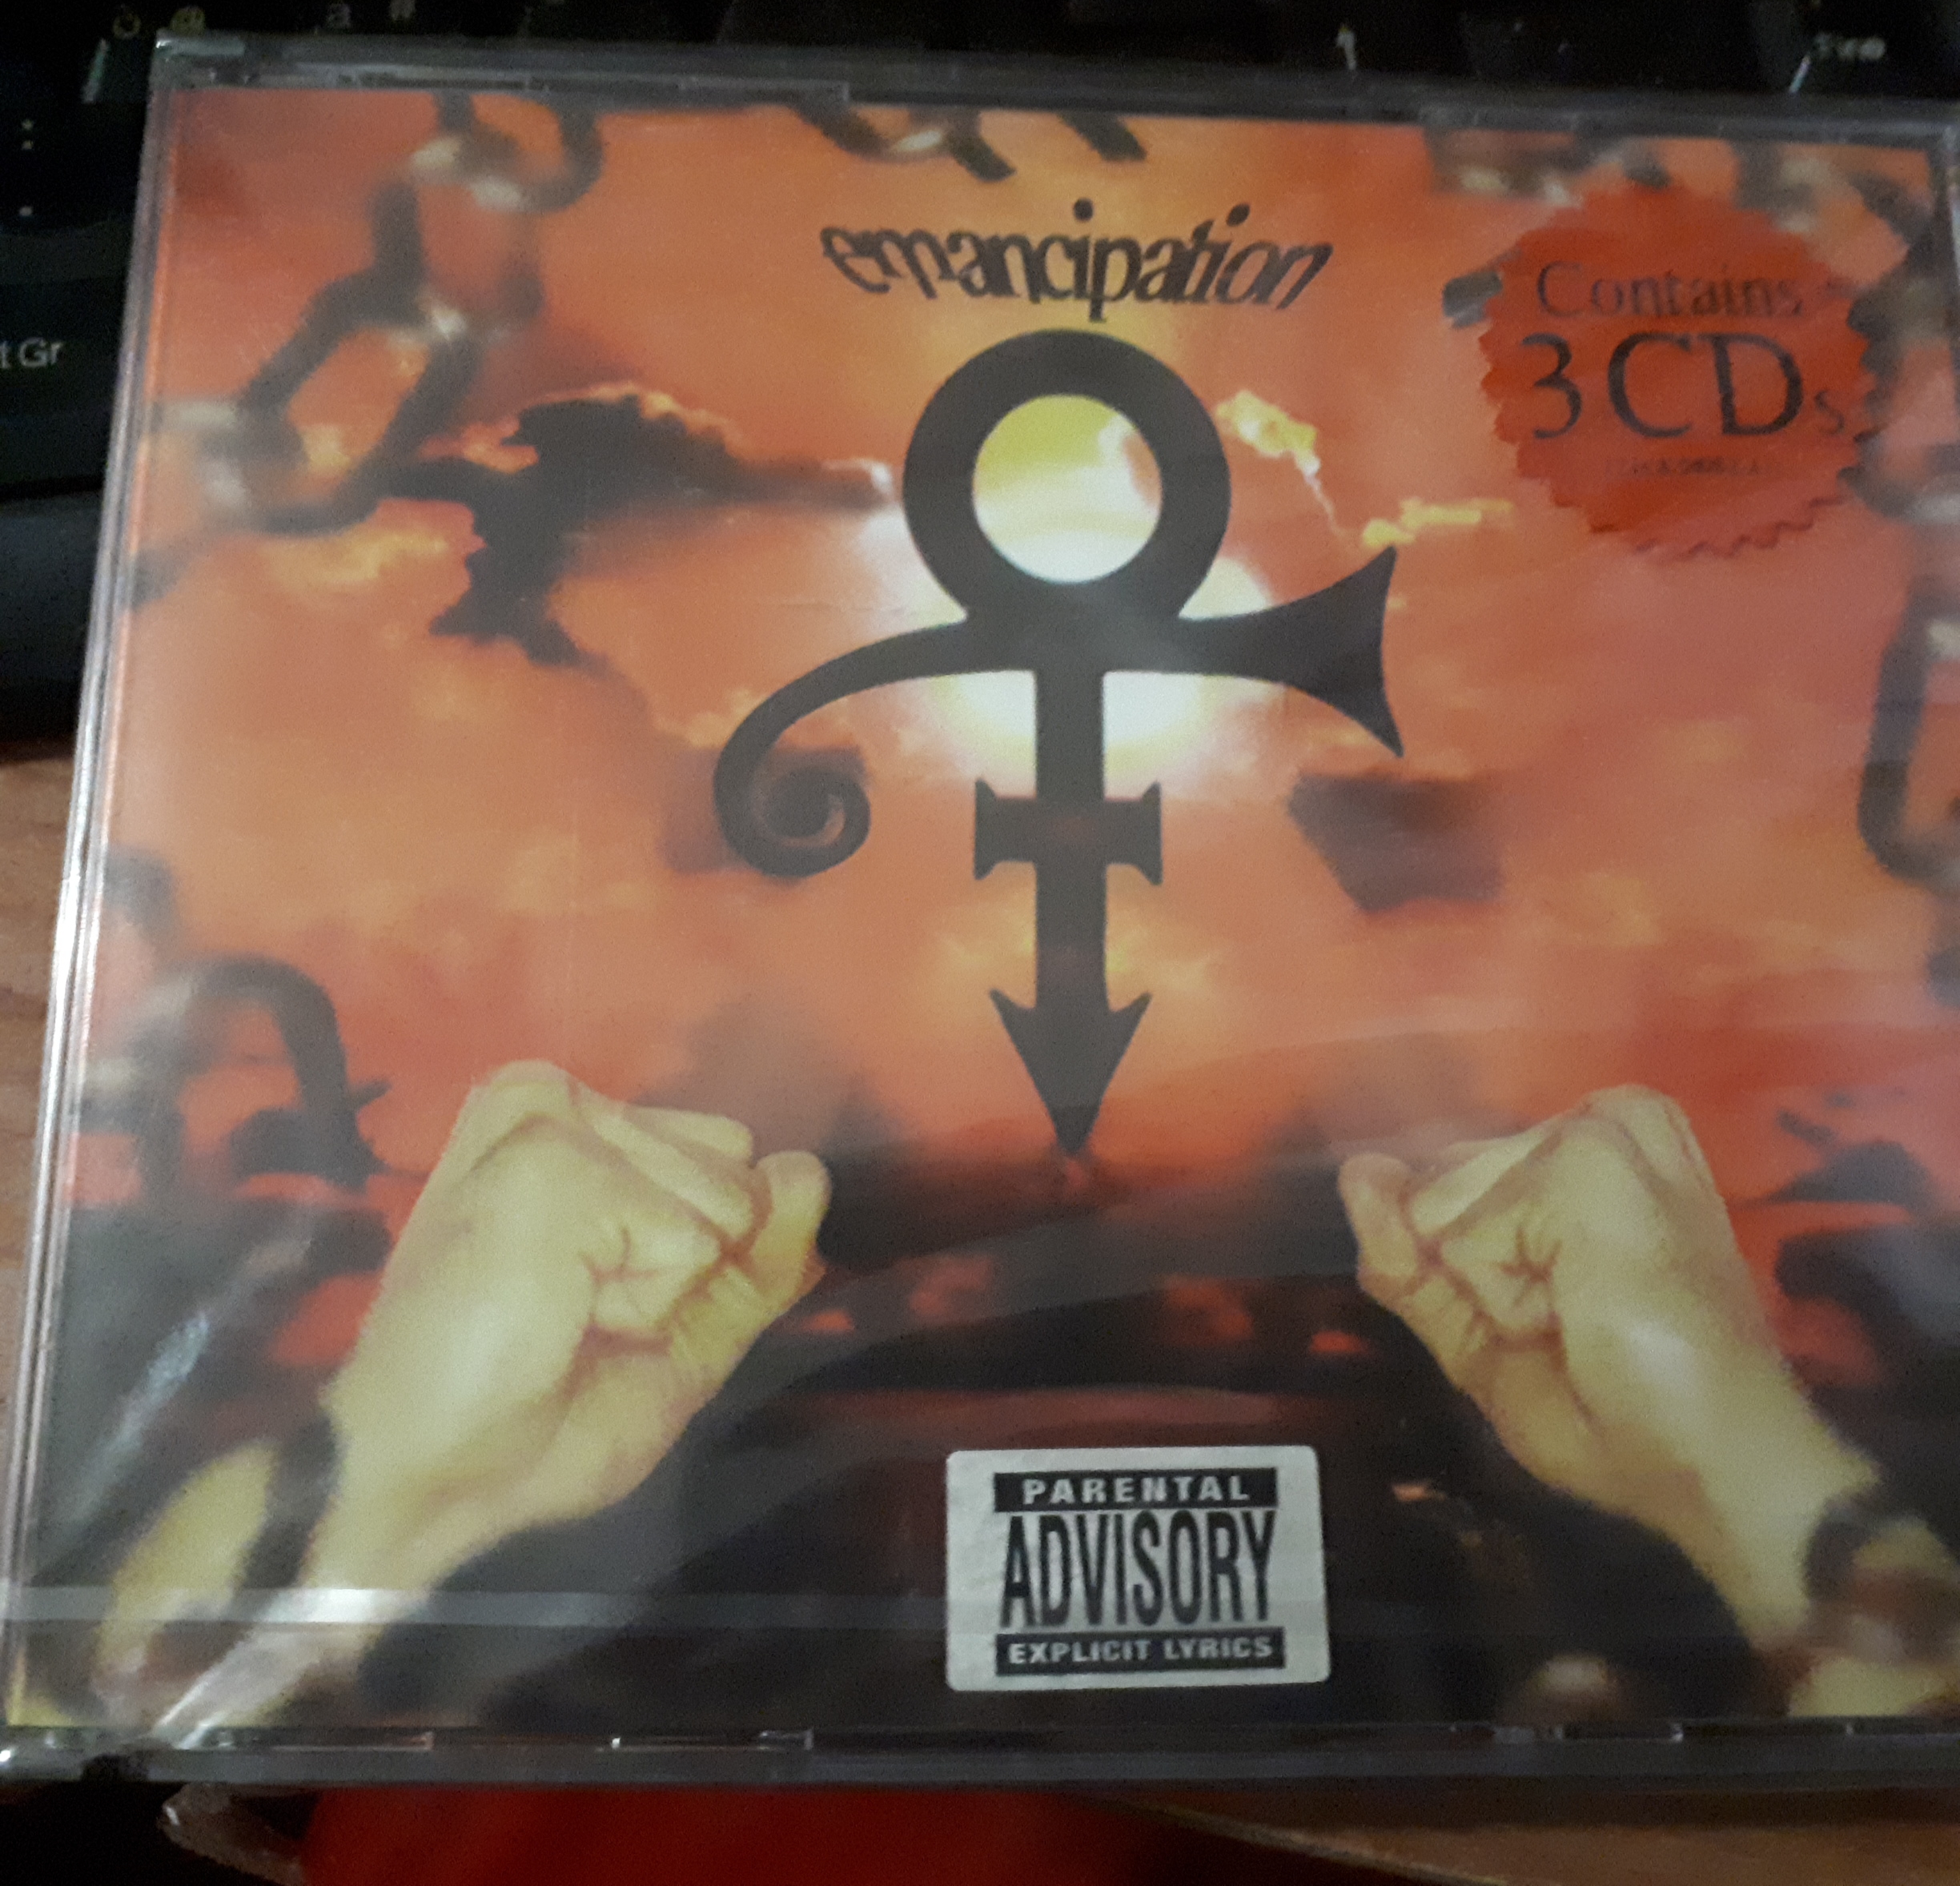 Prince - the Artist - Emancipation 3 cd